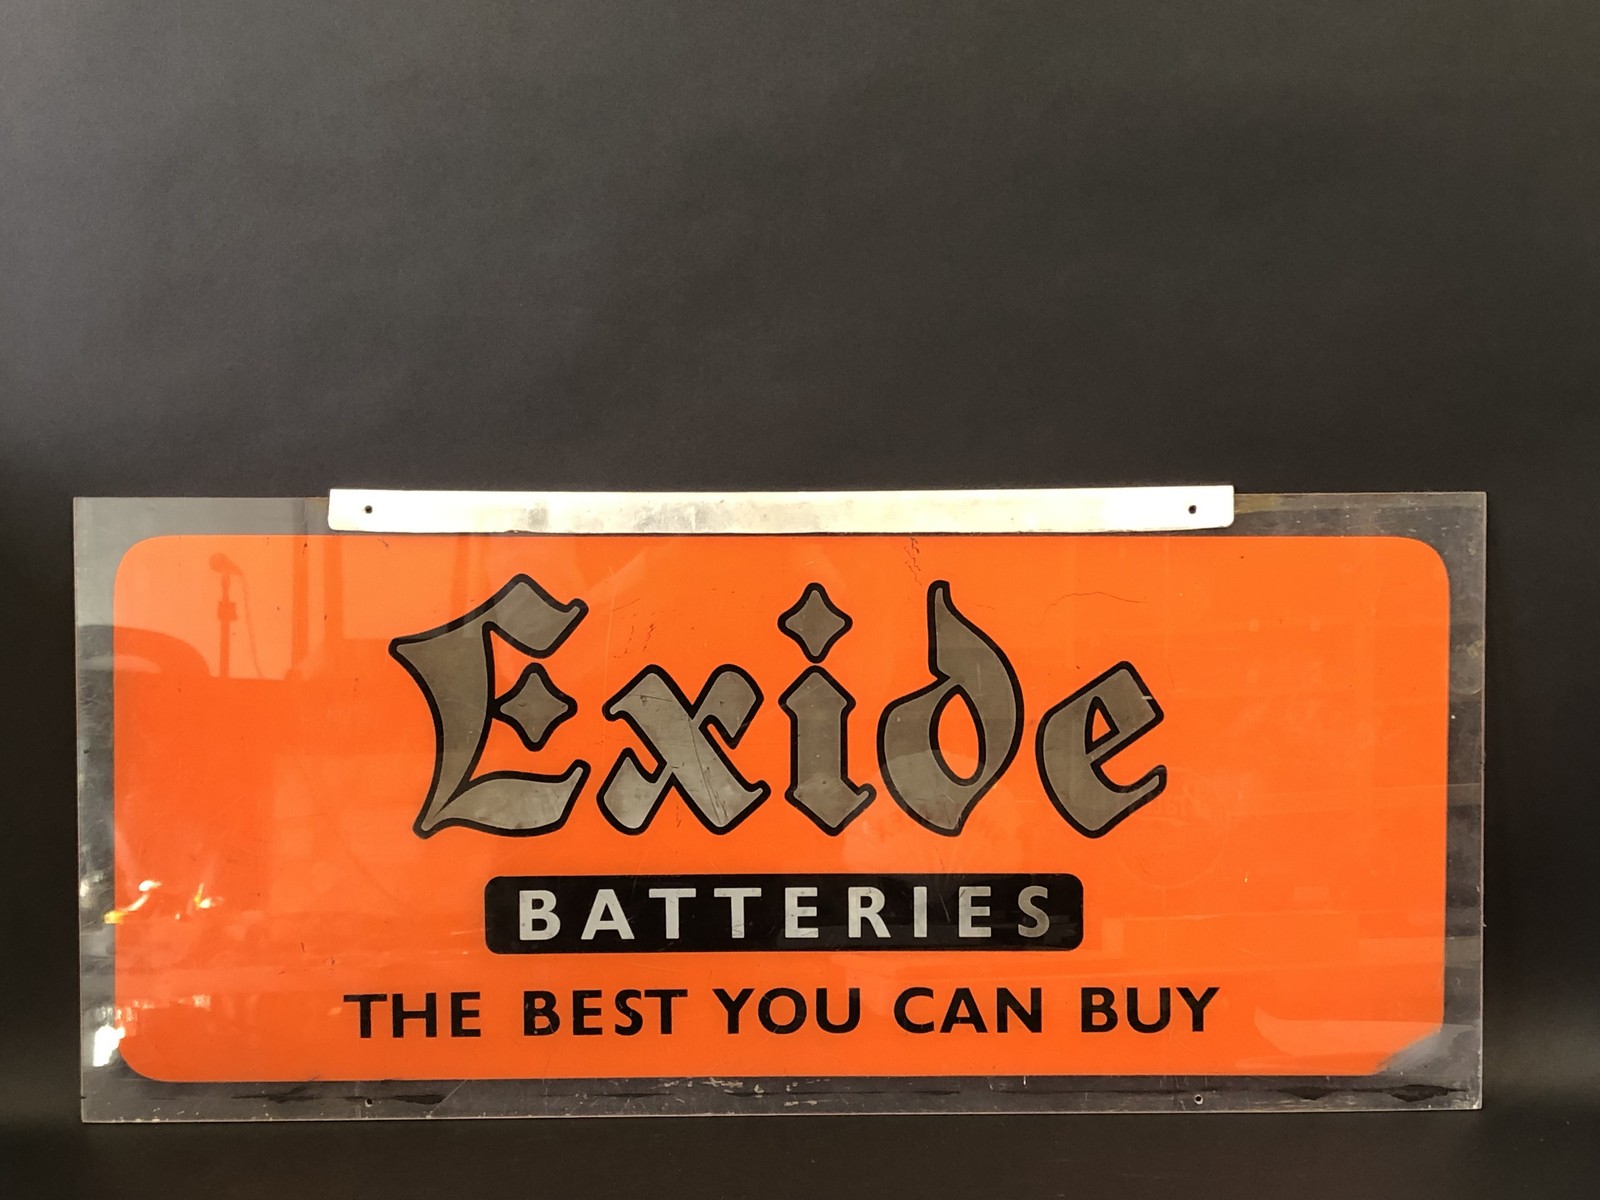 An Exide Batteries rectangular perspex advertising sign, 36 x 16".